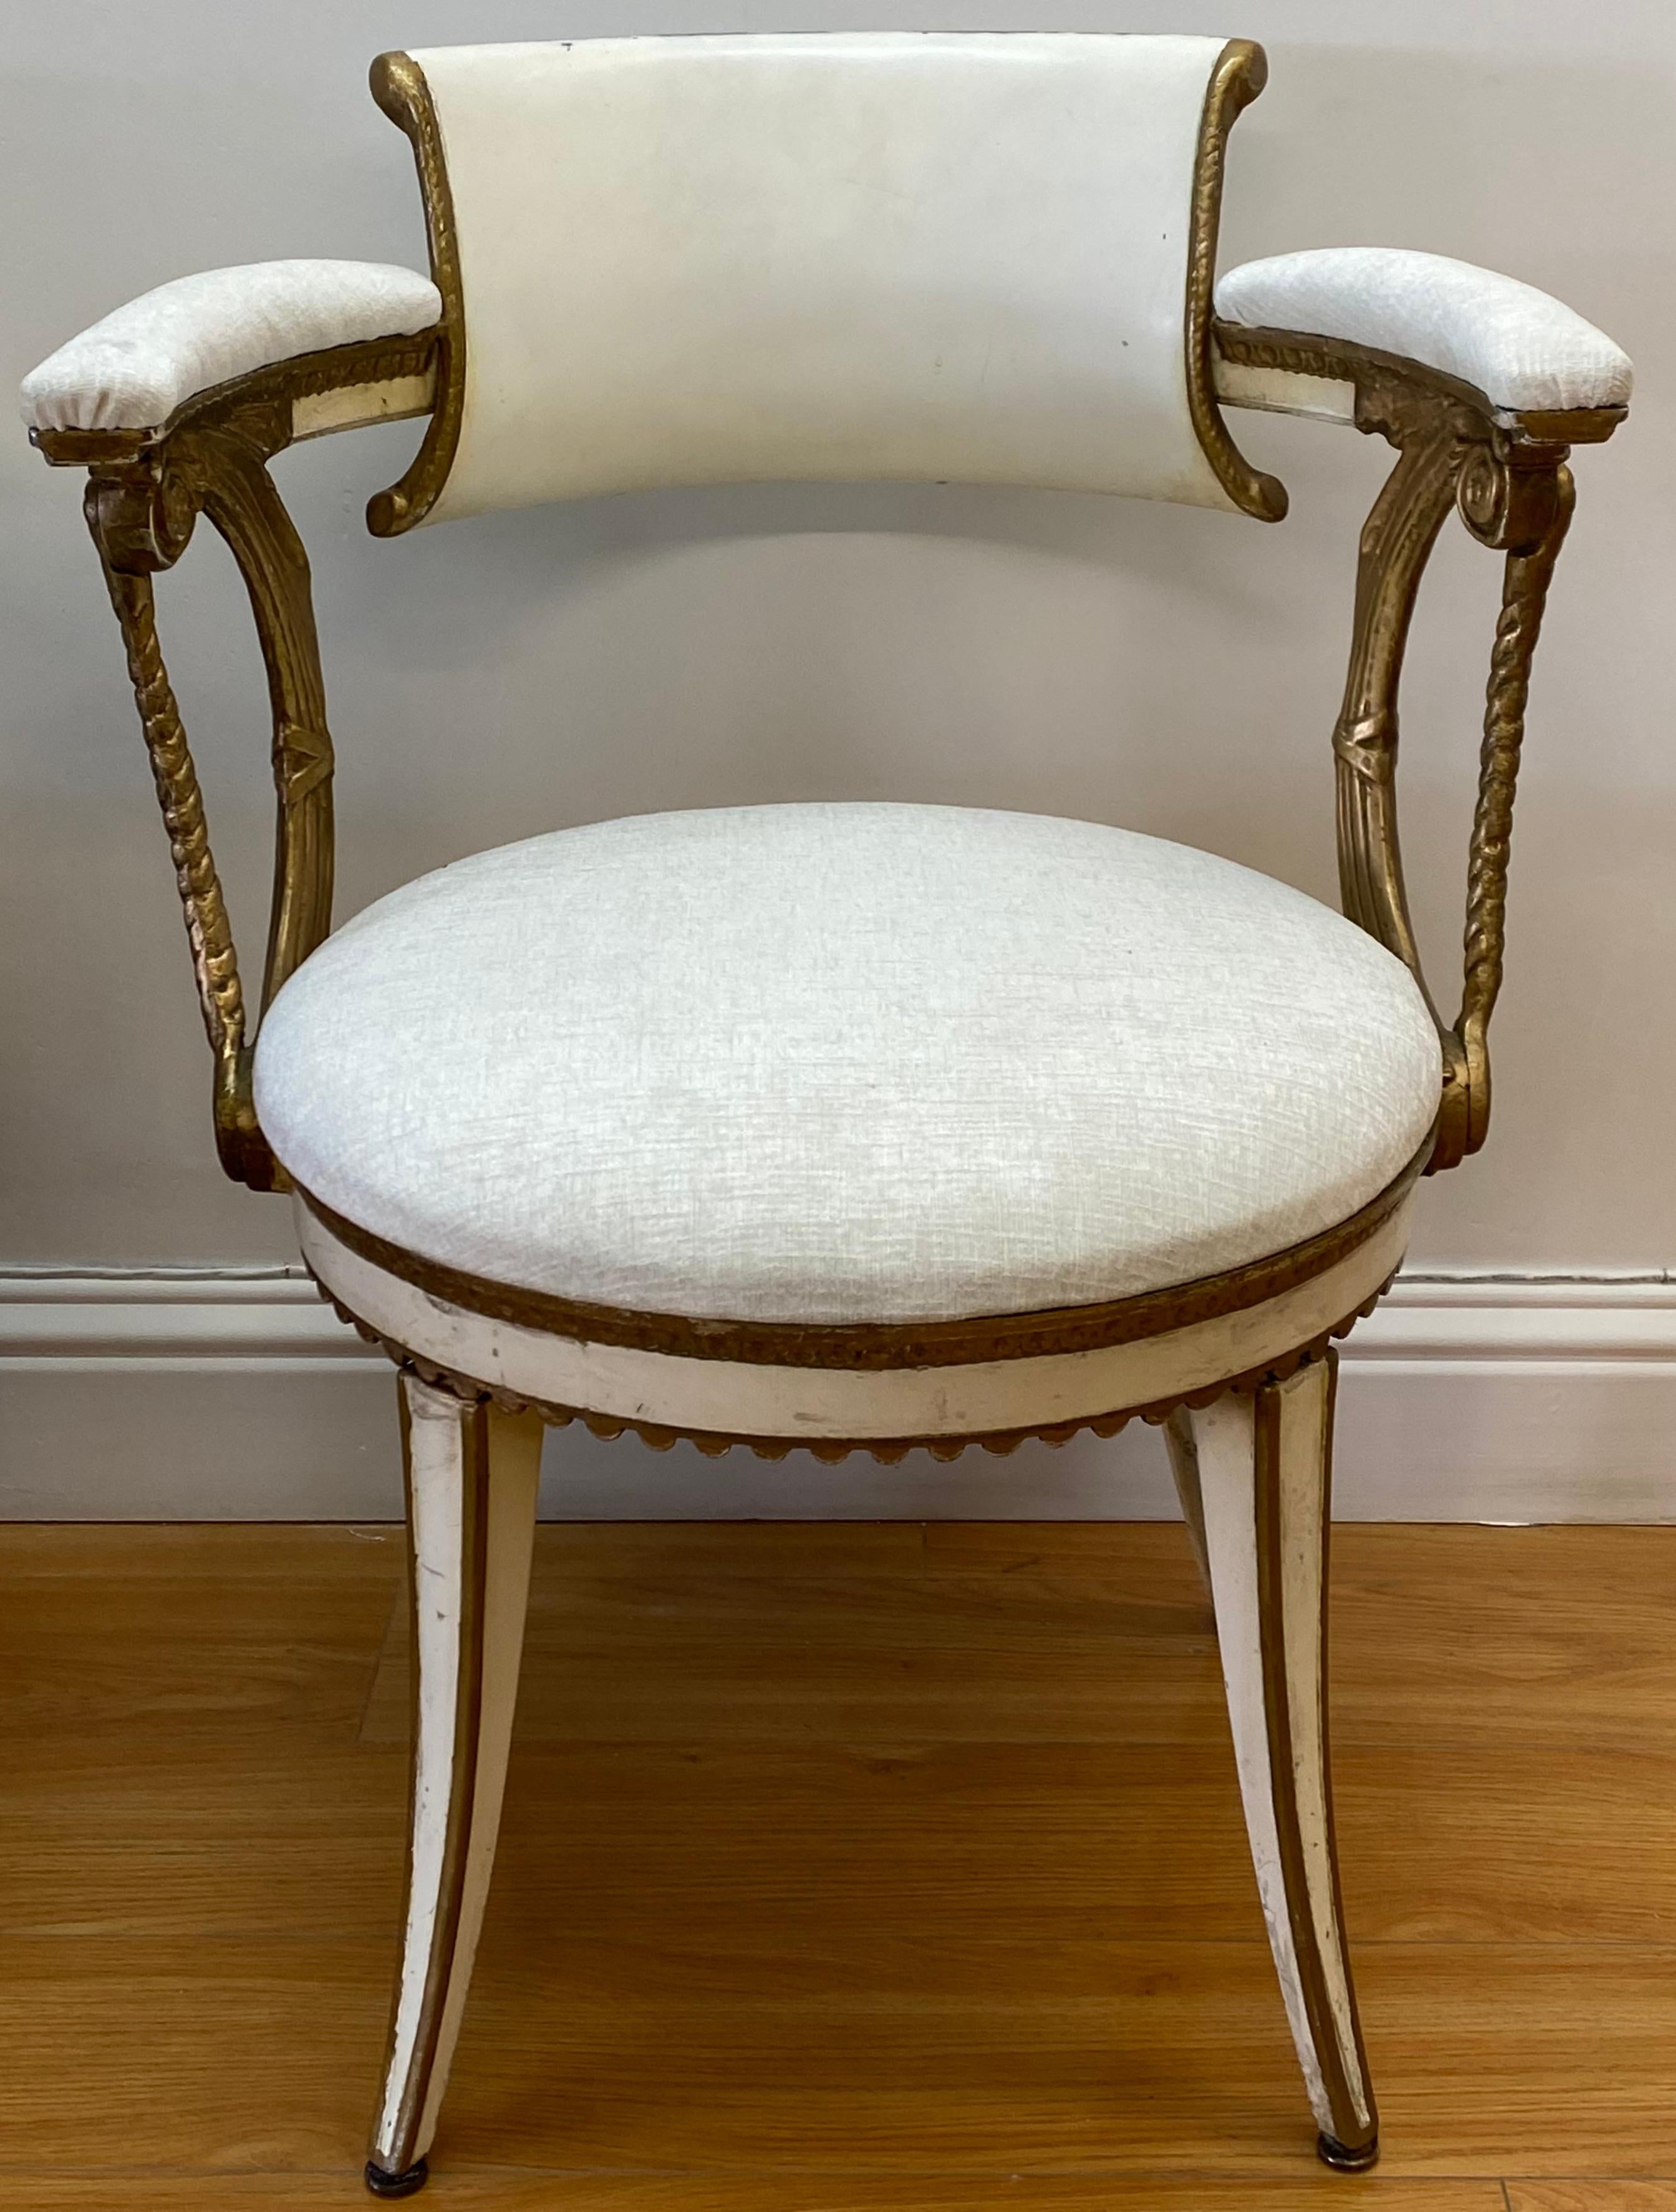 Rare pair of Dorothy Draper designed neoclassical chairs, circa 1930

Cast aluminum and enamel armchairs, circa 1930

Measures: 23